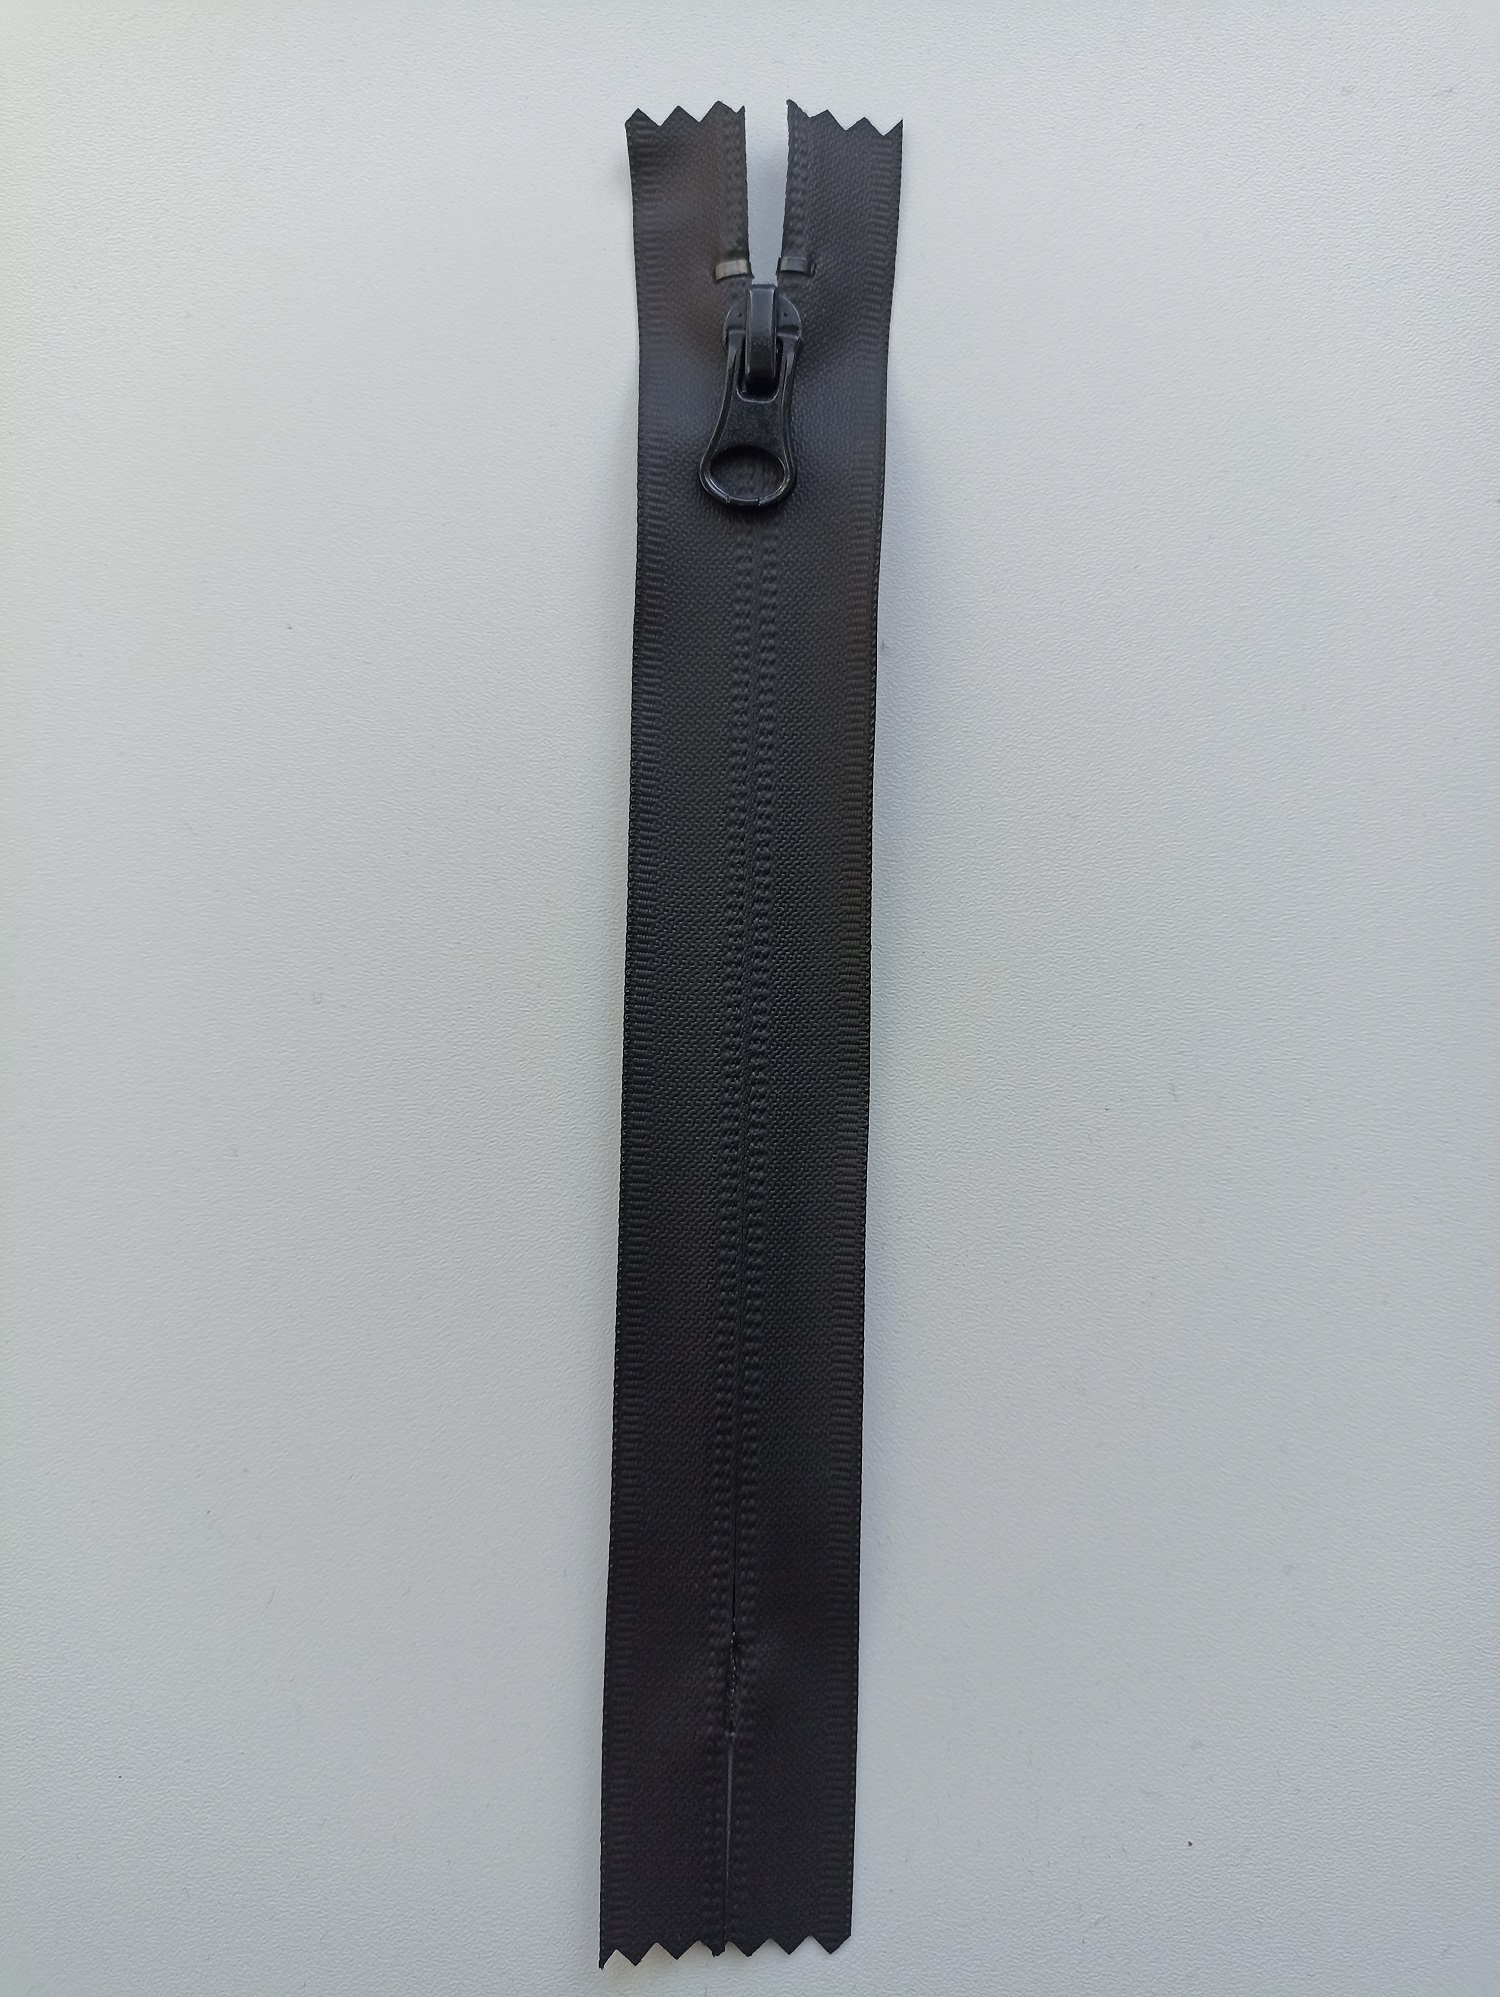 Pocket zipper 18cm spiral 6mm, waterproof